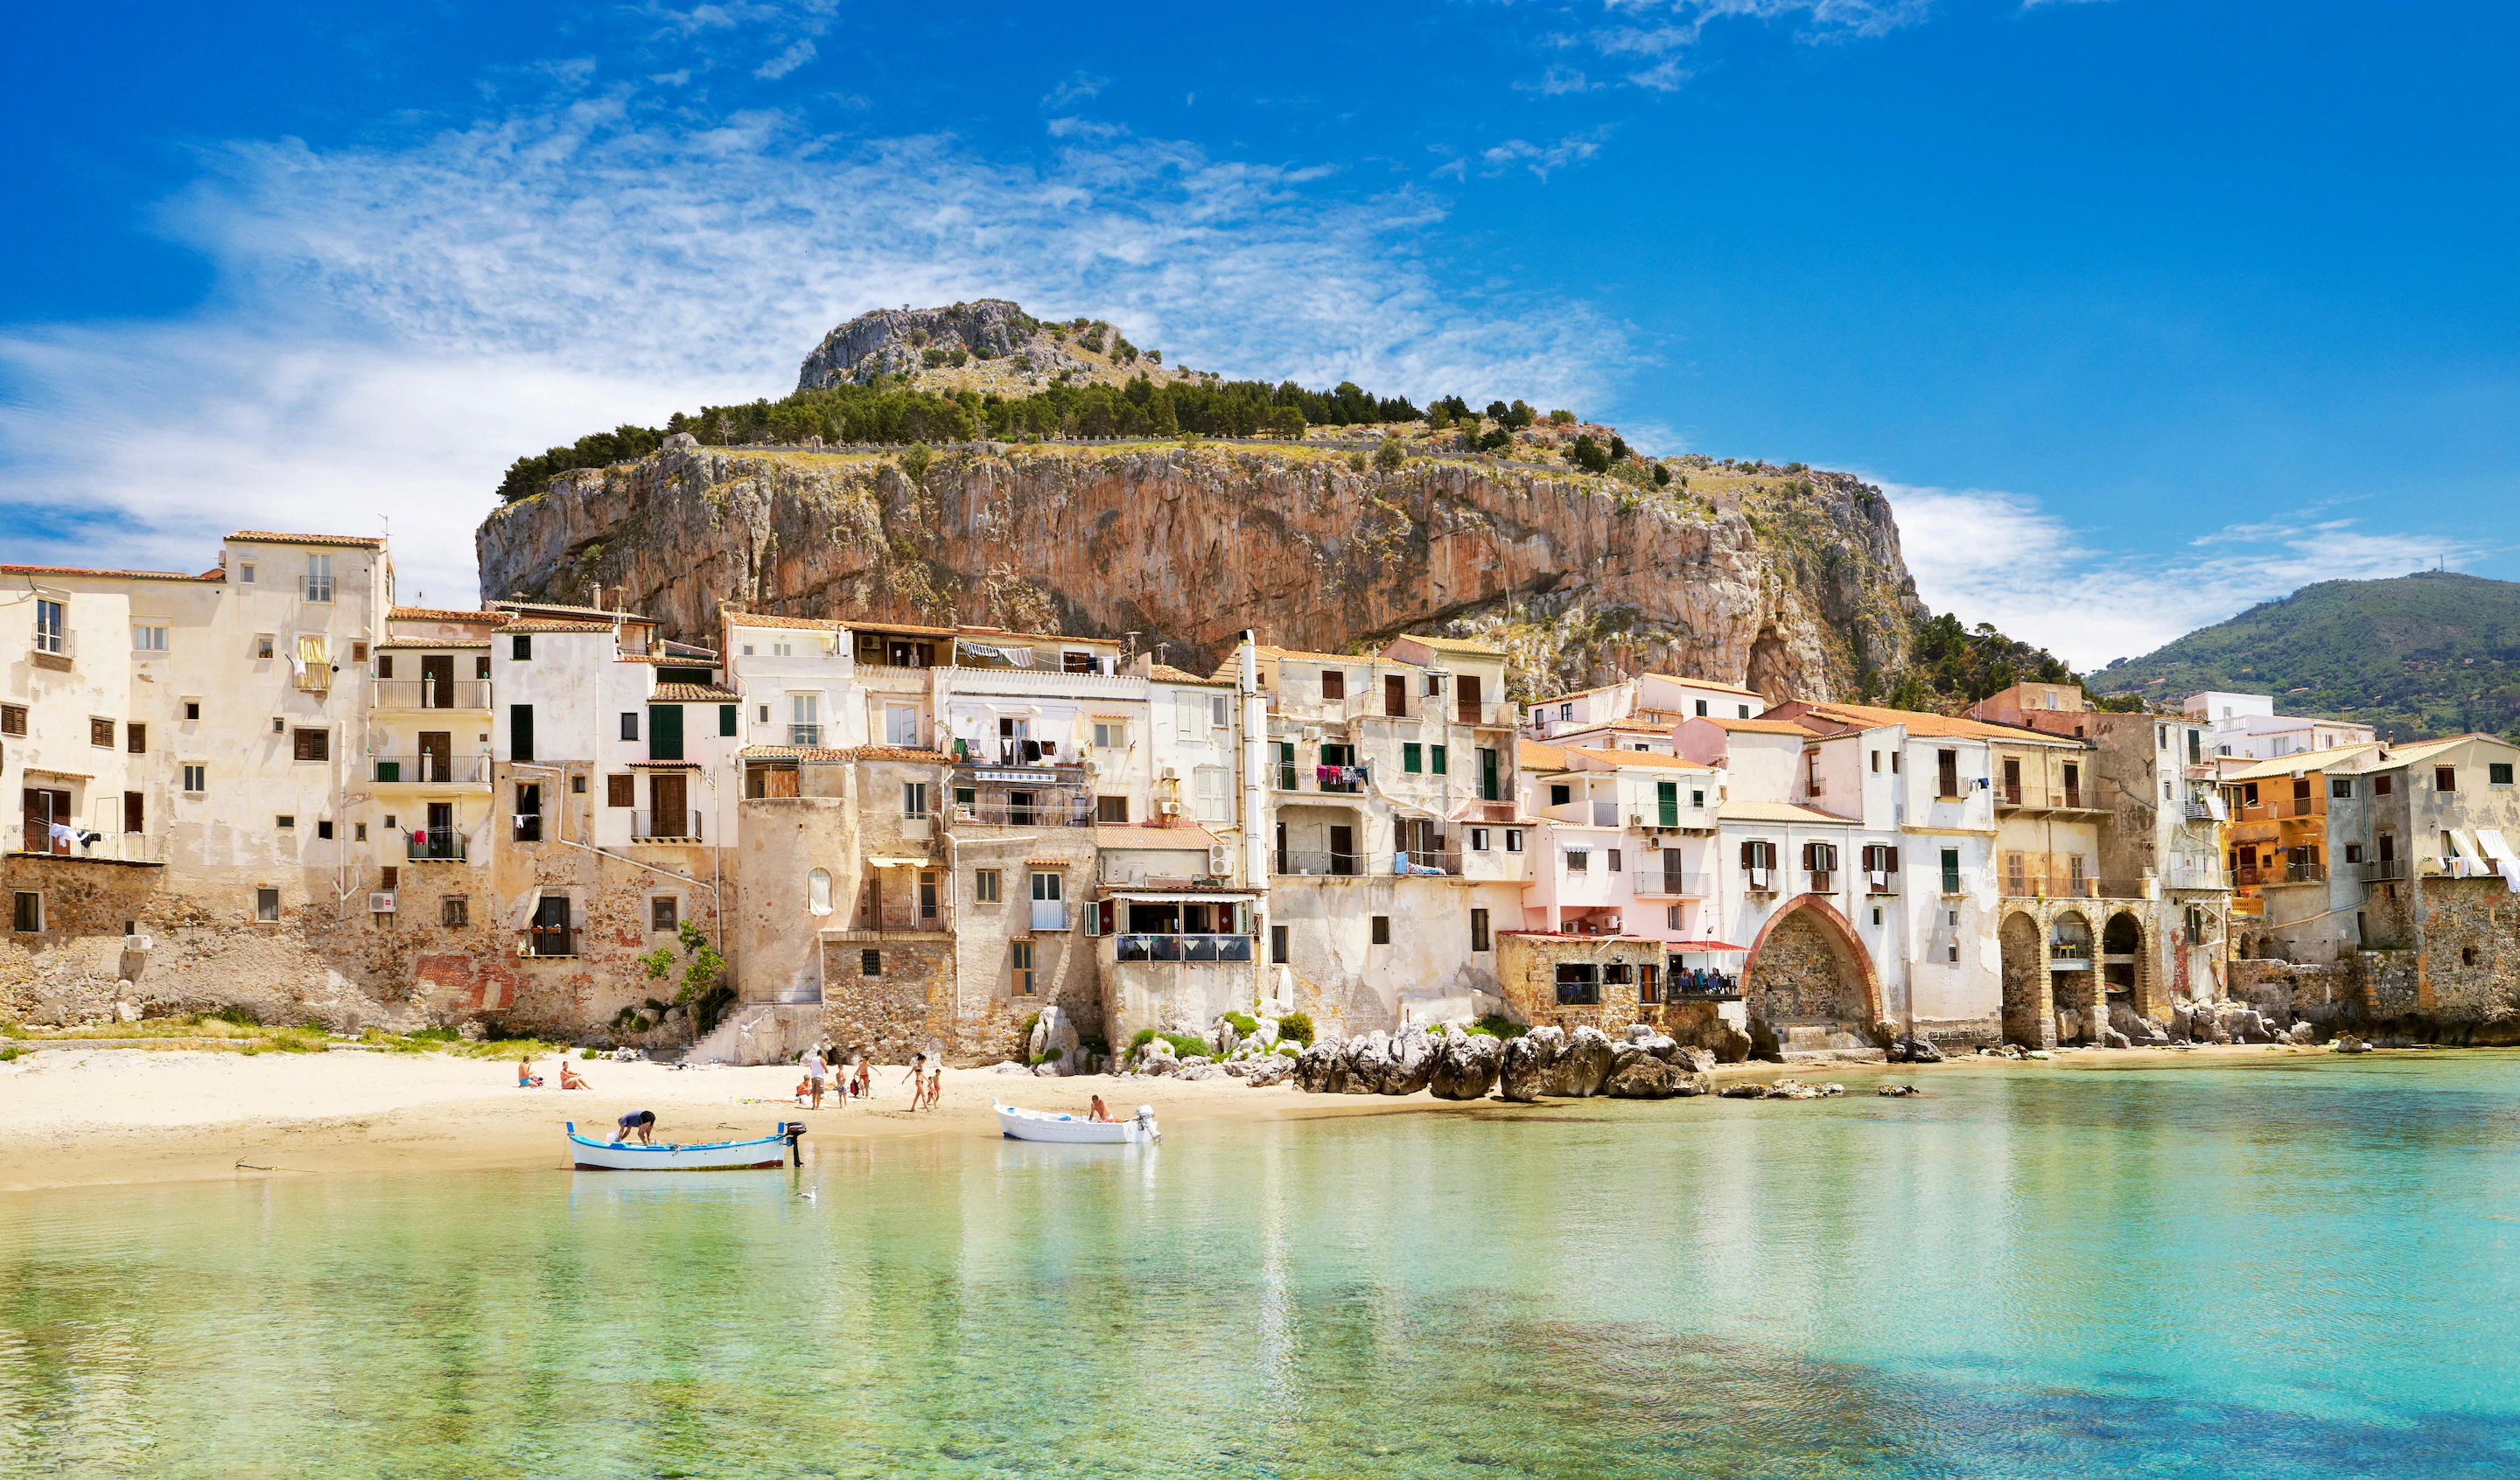 Cefalu, Sicily